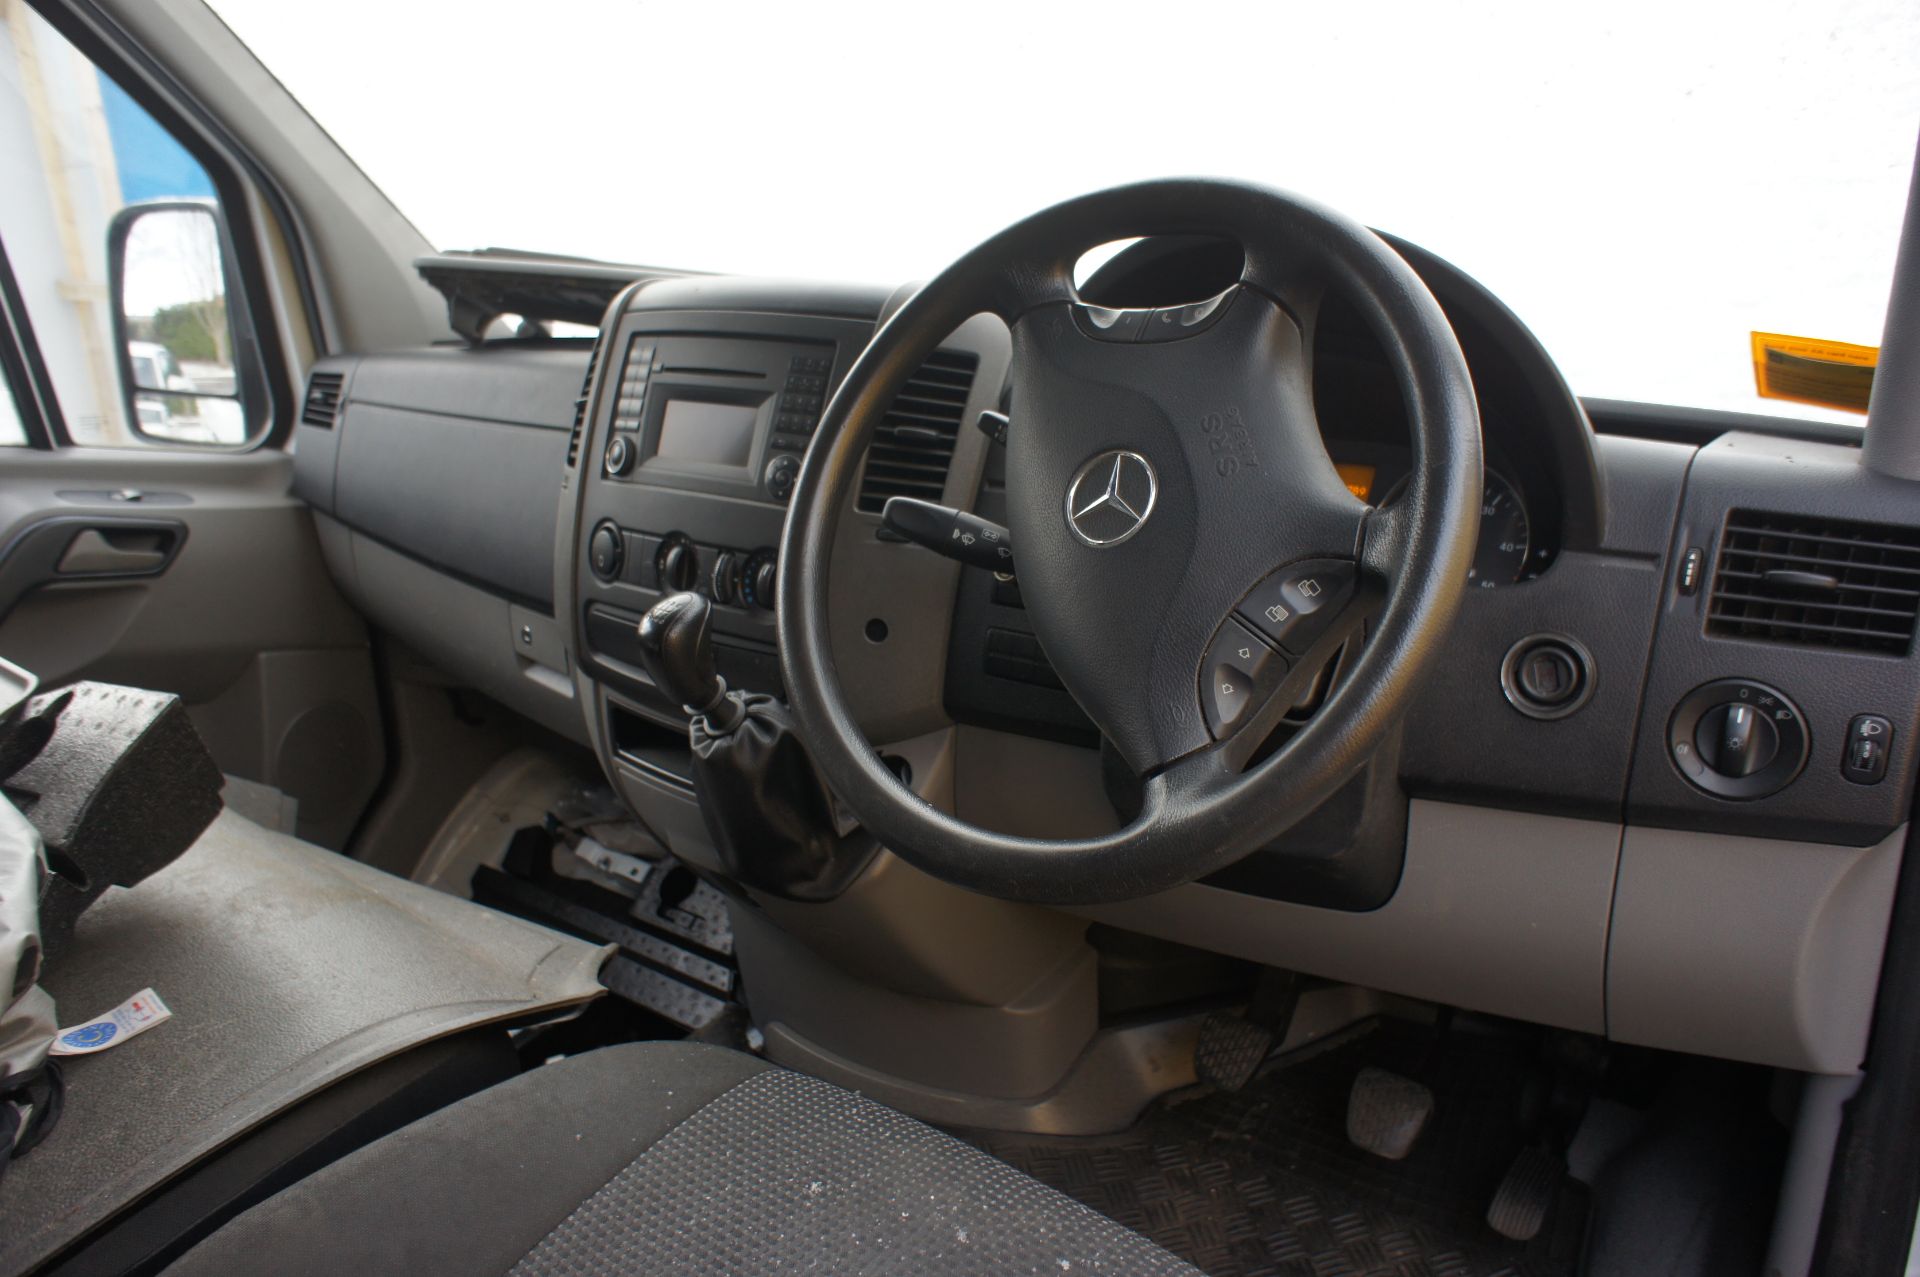 Mercedes Sprinter 313 CDI LWB Van, Registration HY12 S - Image 6 of 9